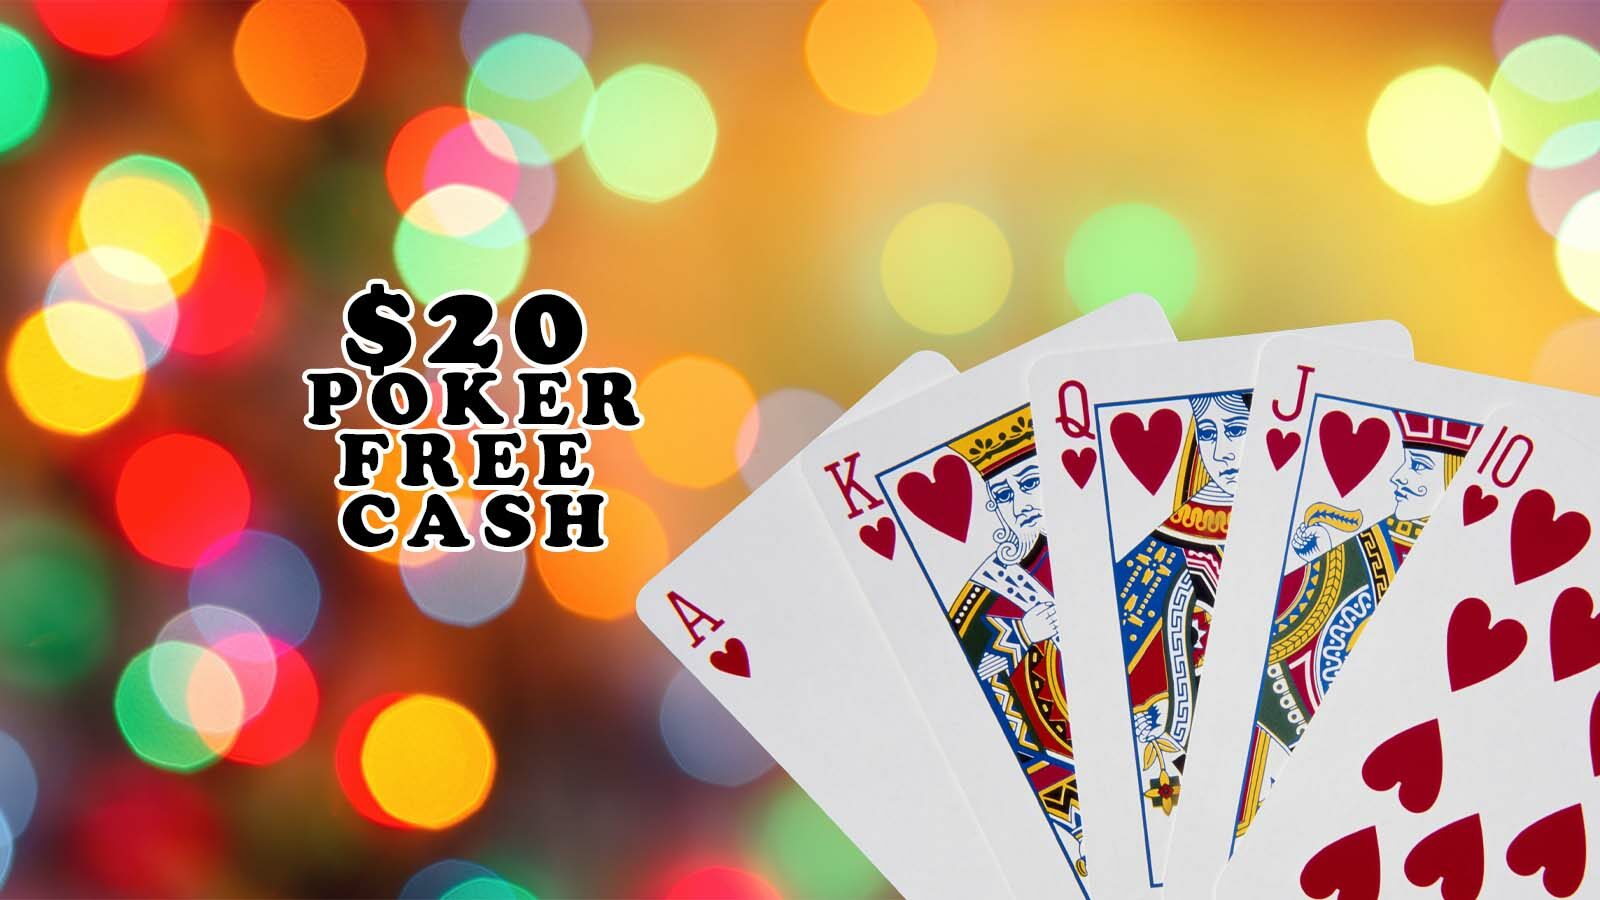 $20 Poker Free Cash Play